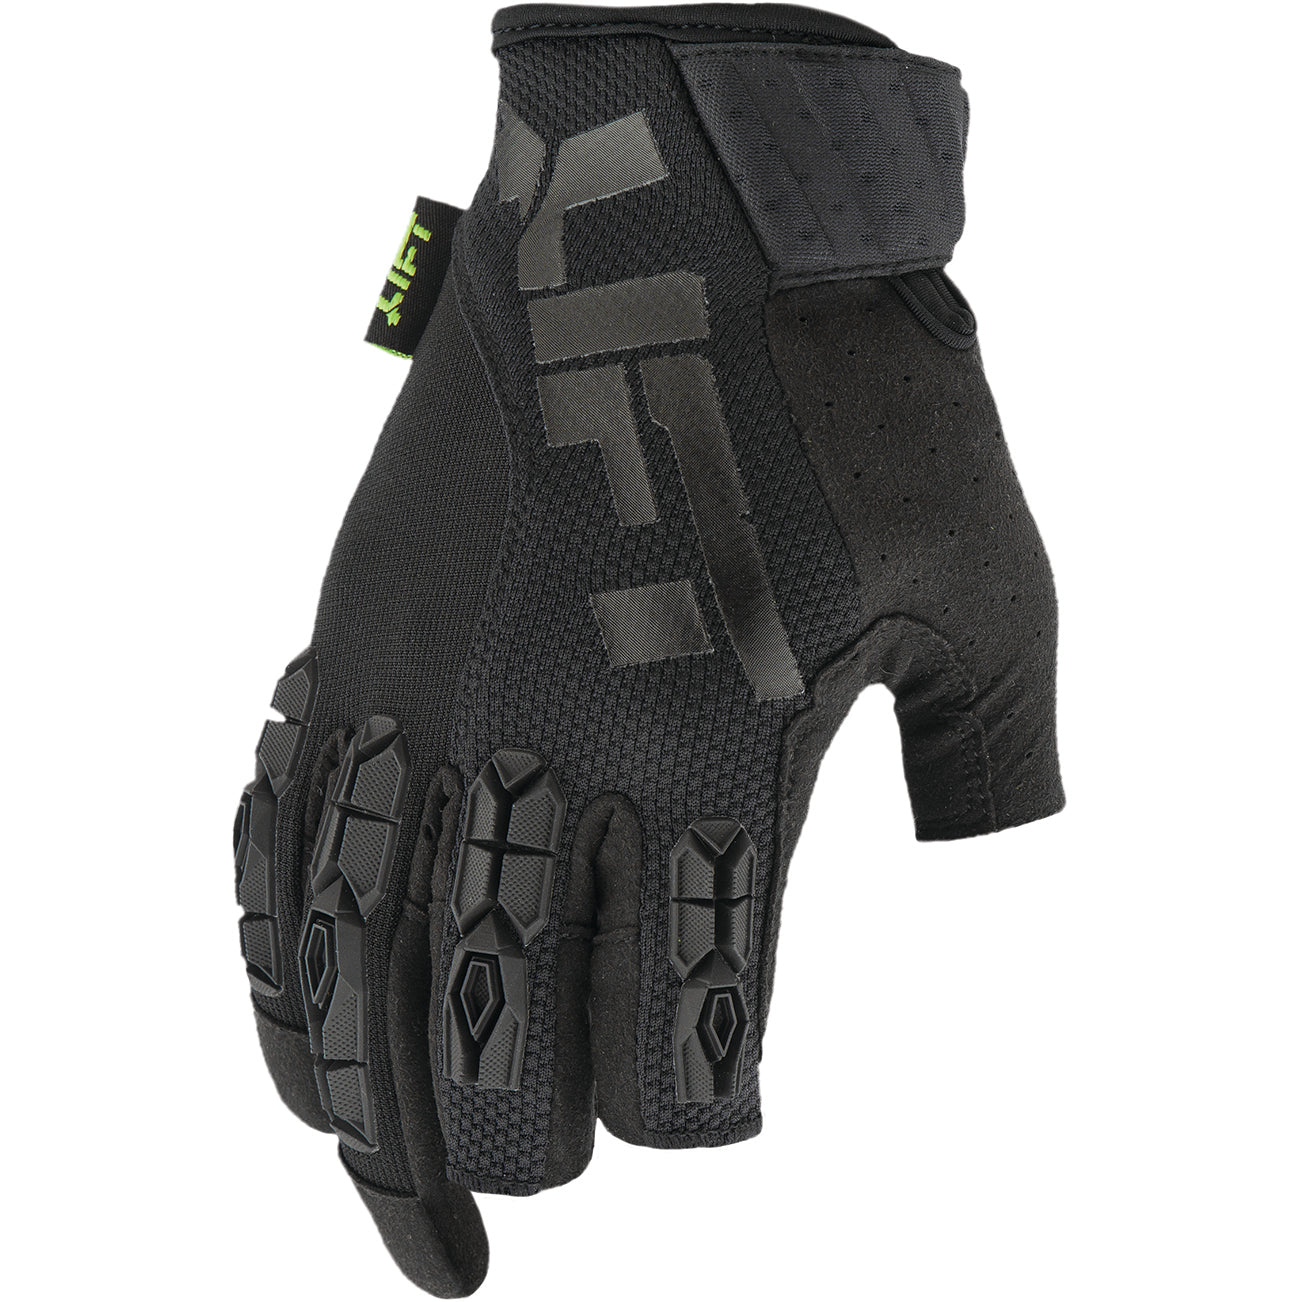 Lift Safety GON-17CFBRL L Option Pro Glove